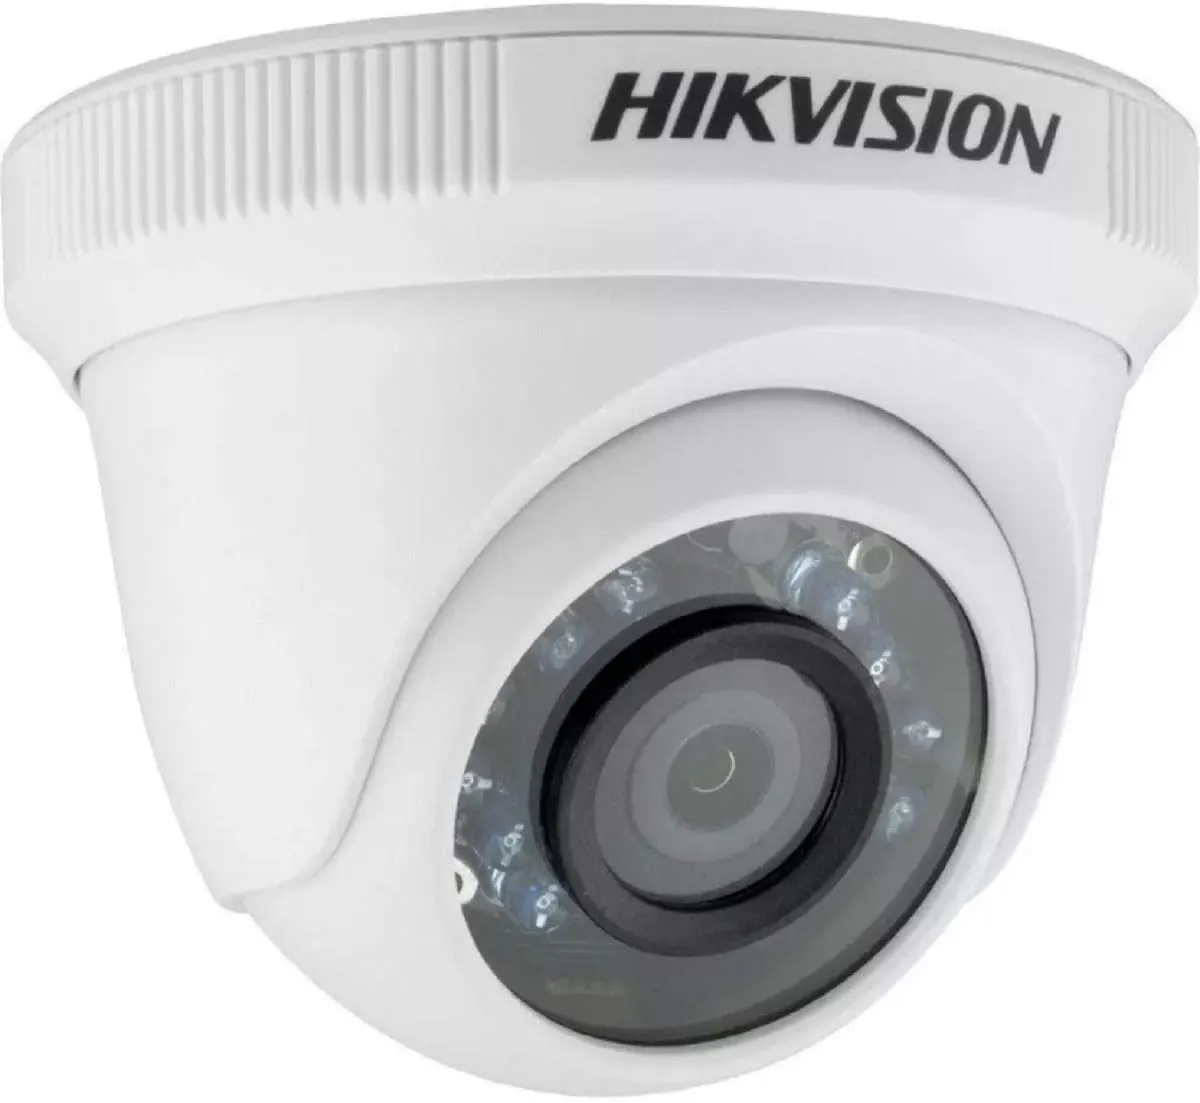 Hikvision Security Camera, 2 MP, 2.8mm Lens, DS.2CE56D0T